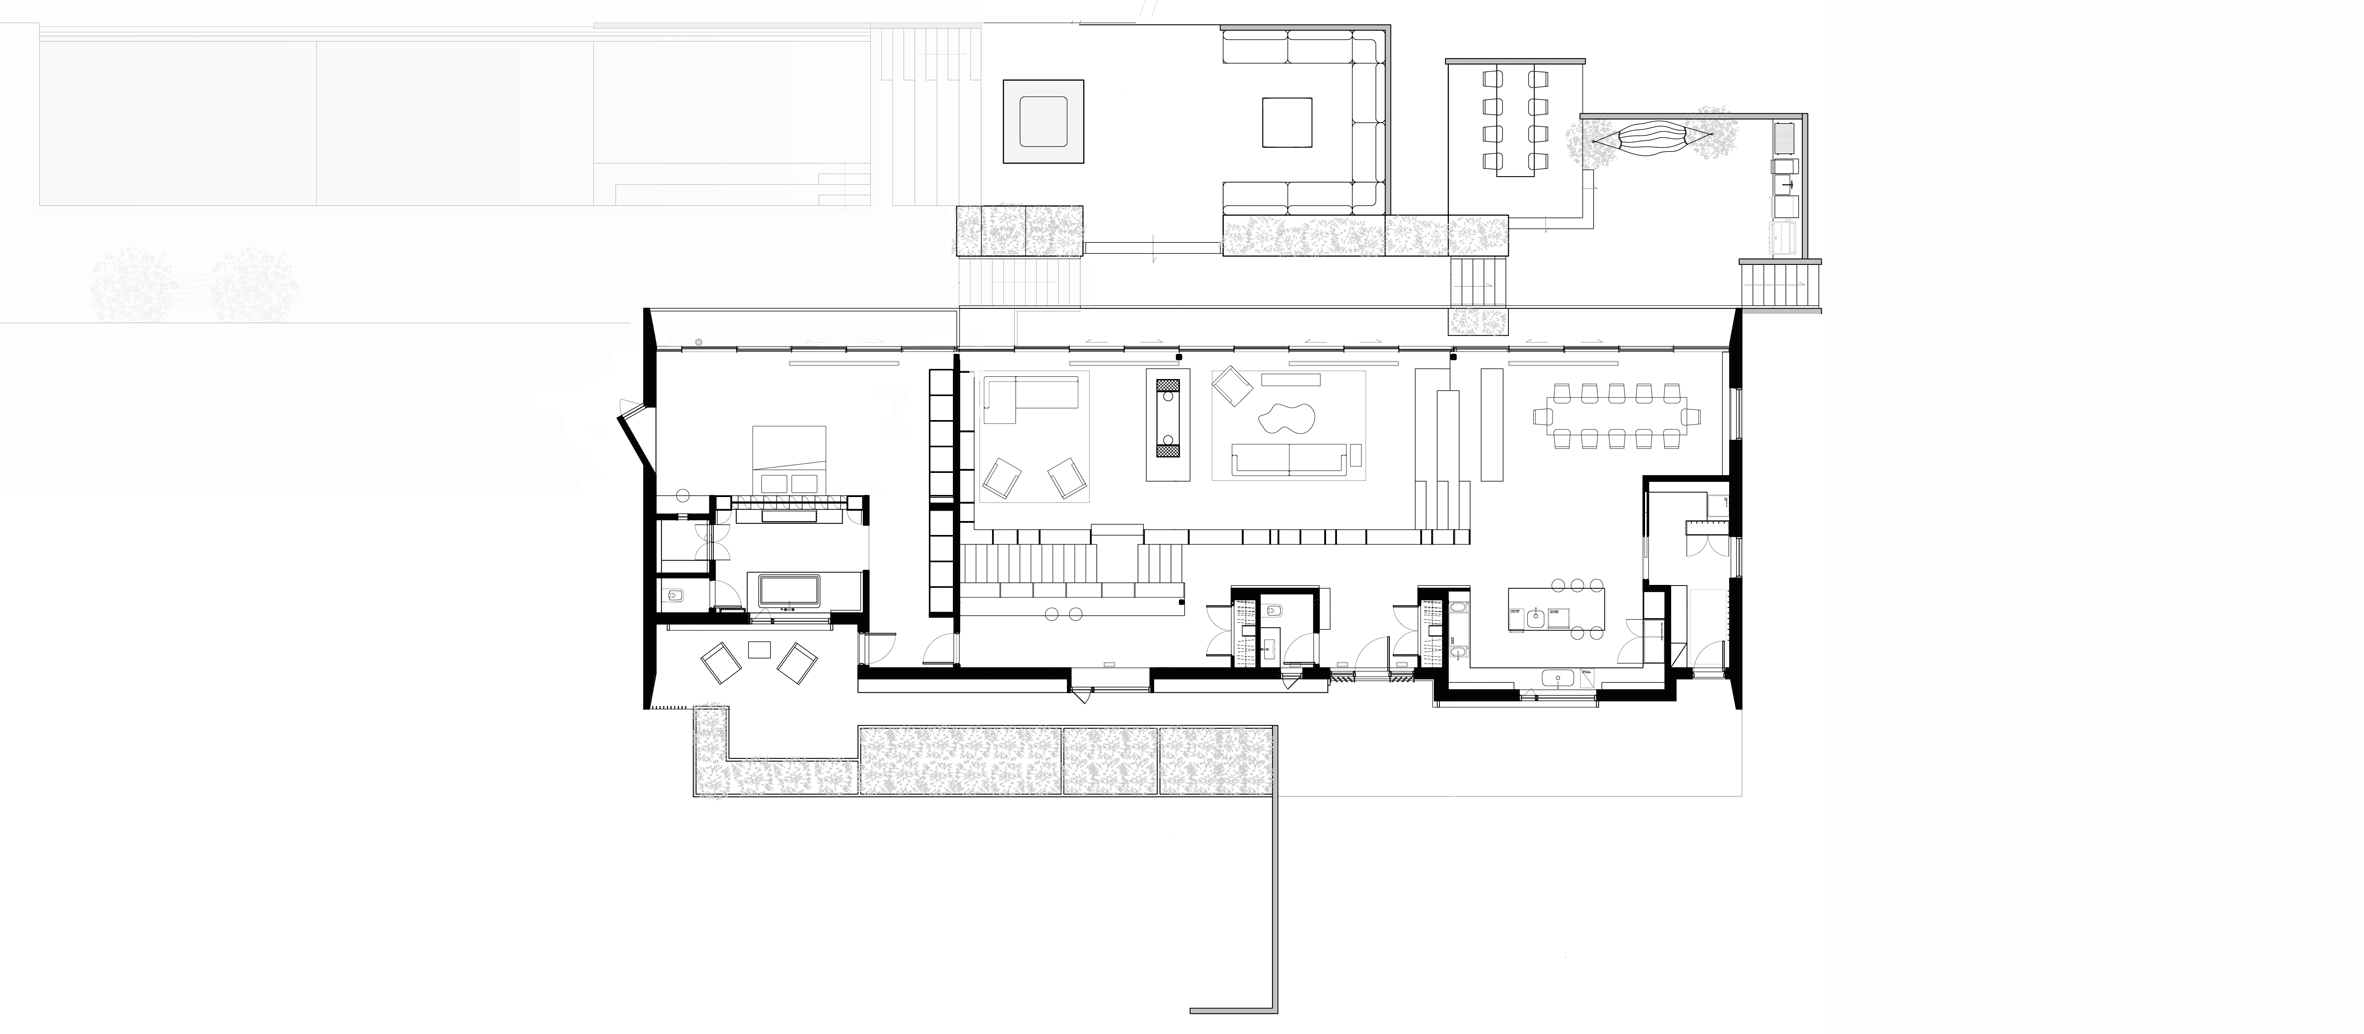 peconic-house-mapos-studio-hamptons-long-island-new-york_dezeen_floor-plan.gif